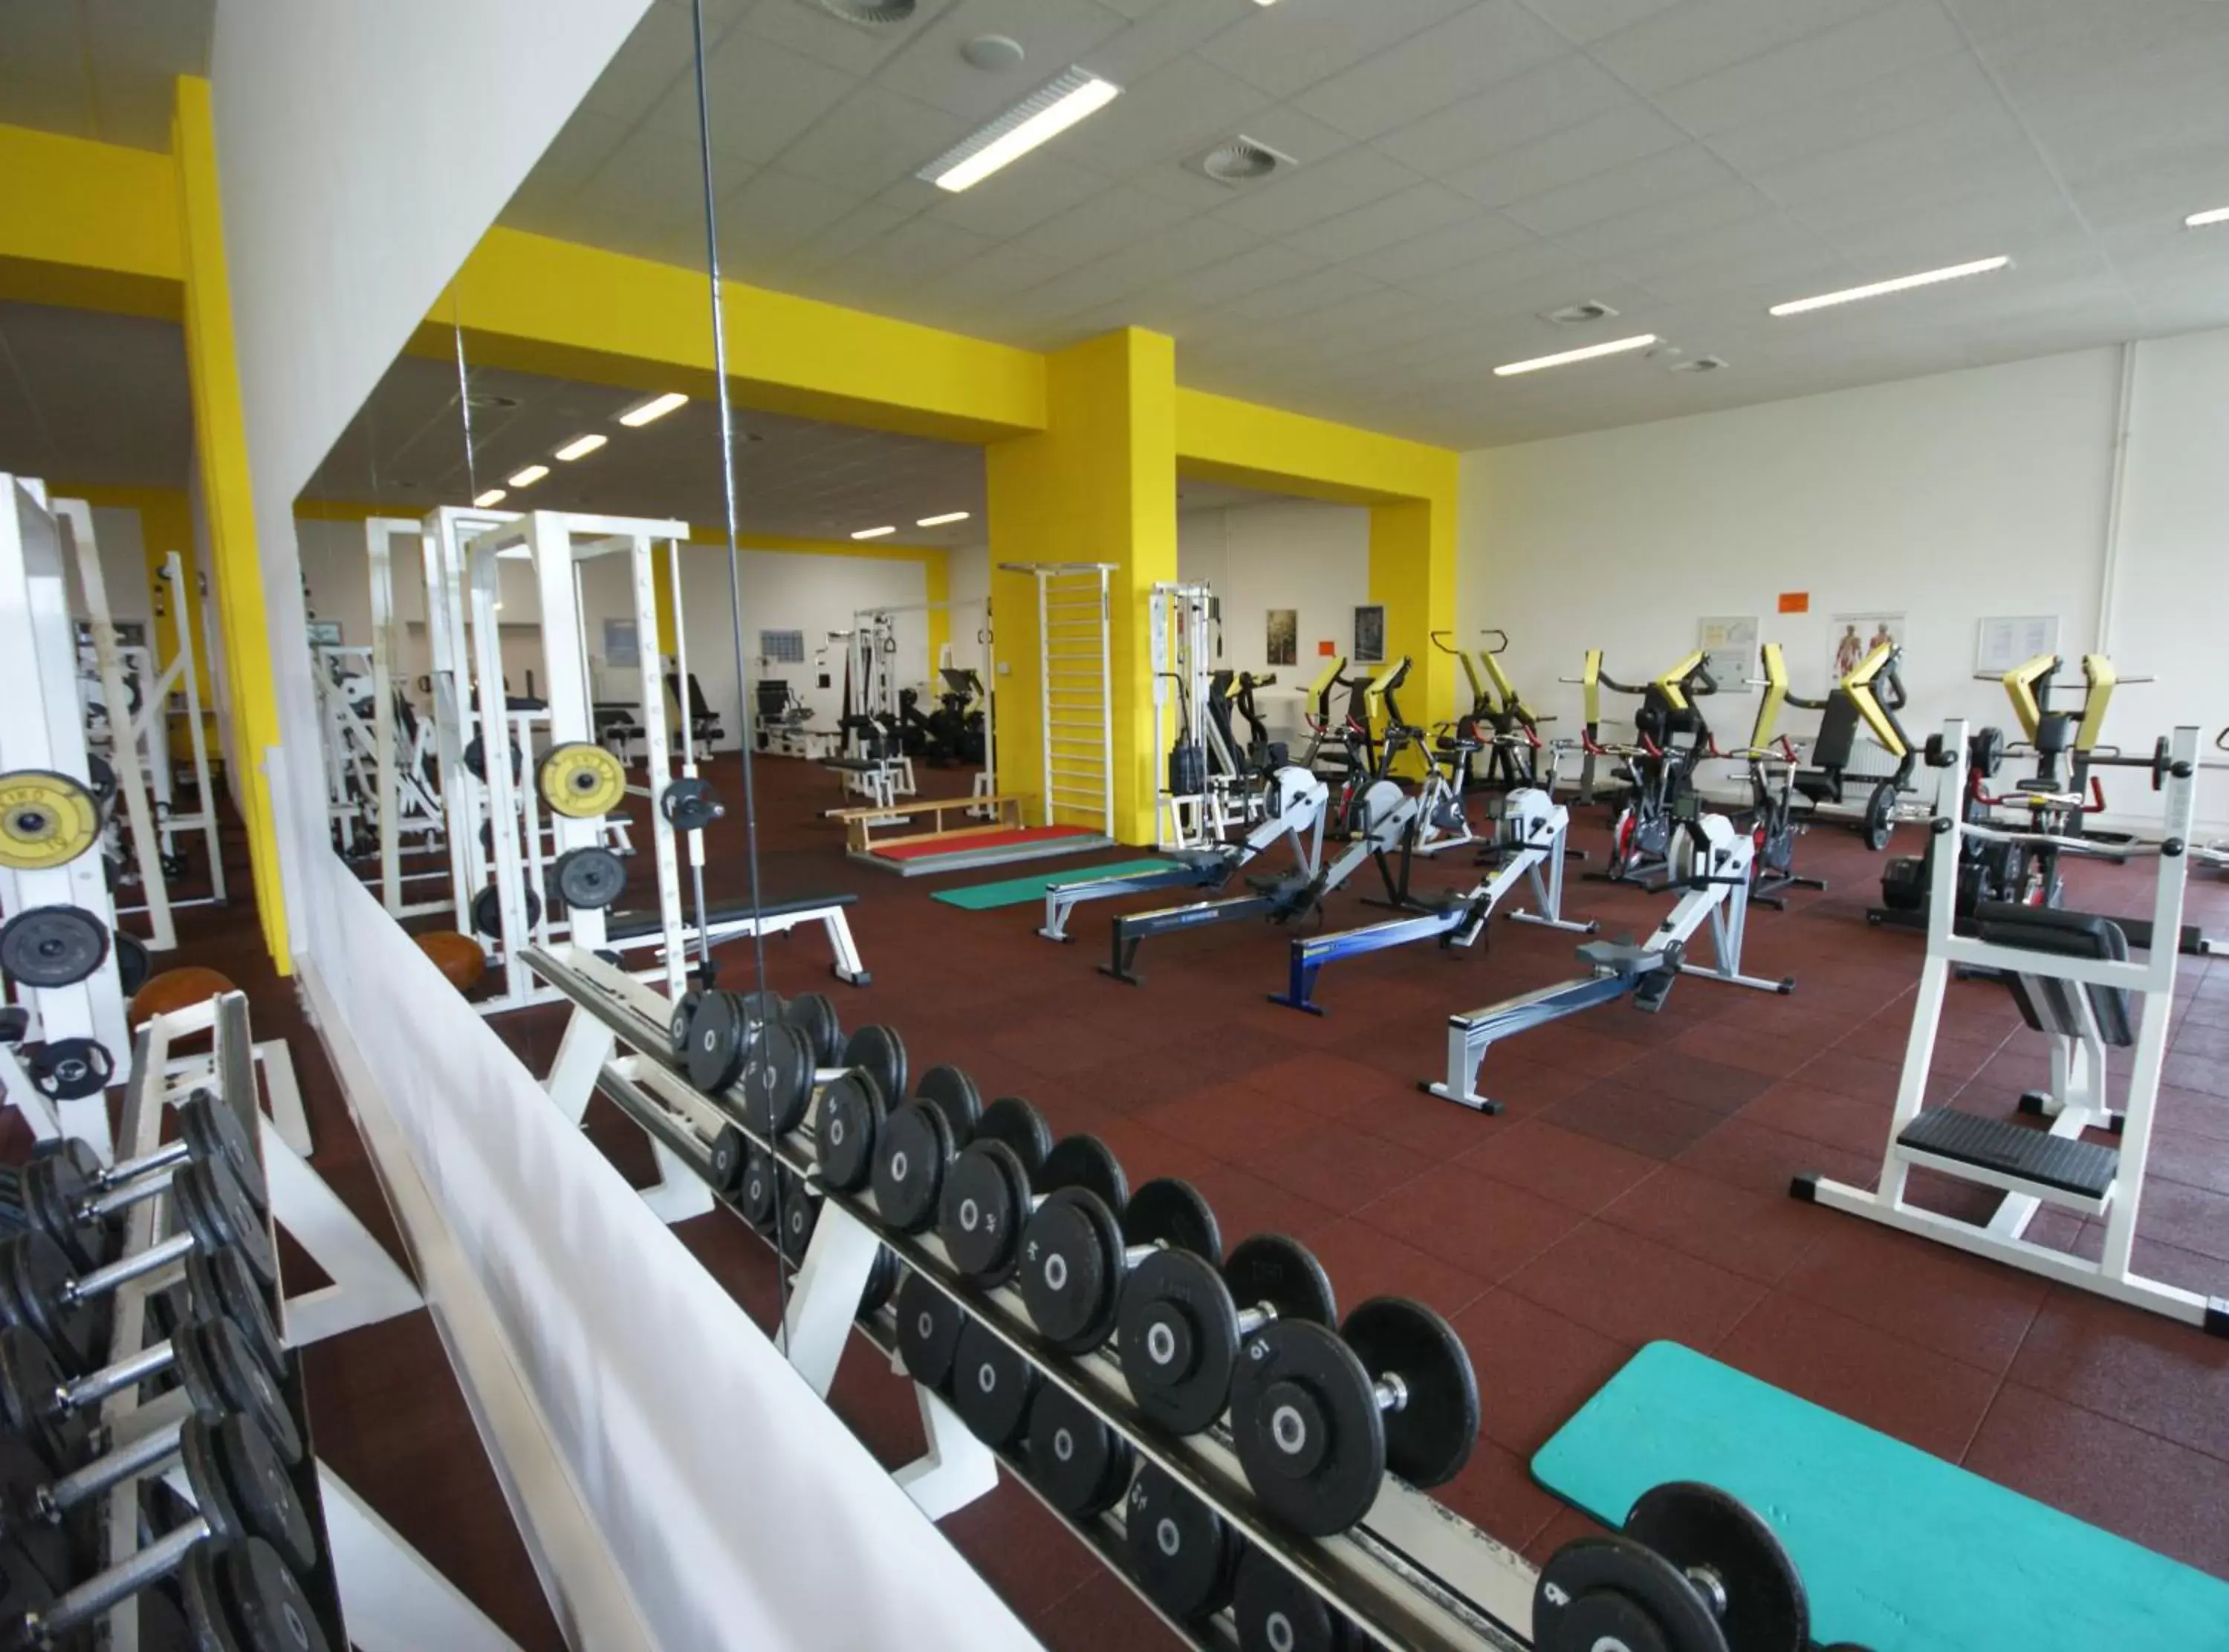 Fitness centre/facilities, Fitness Center/Facilities in Sportpark Rabenberg